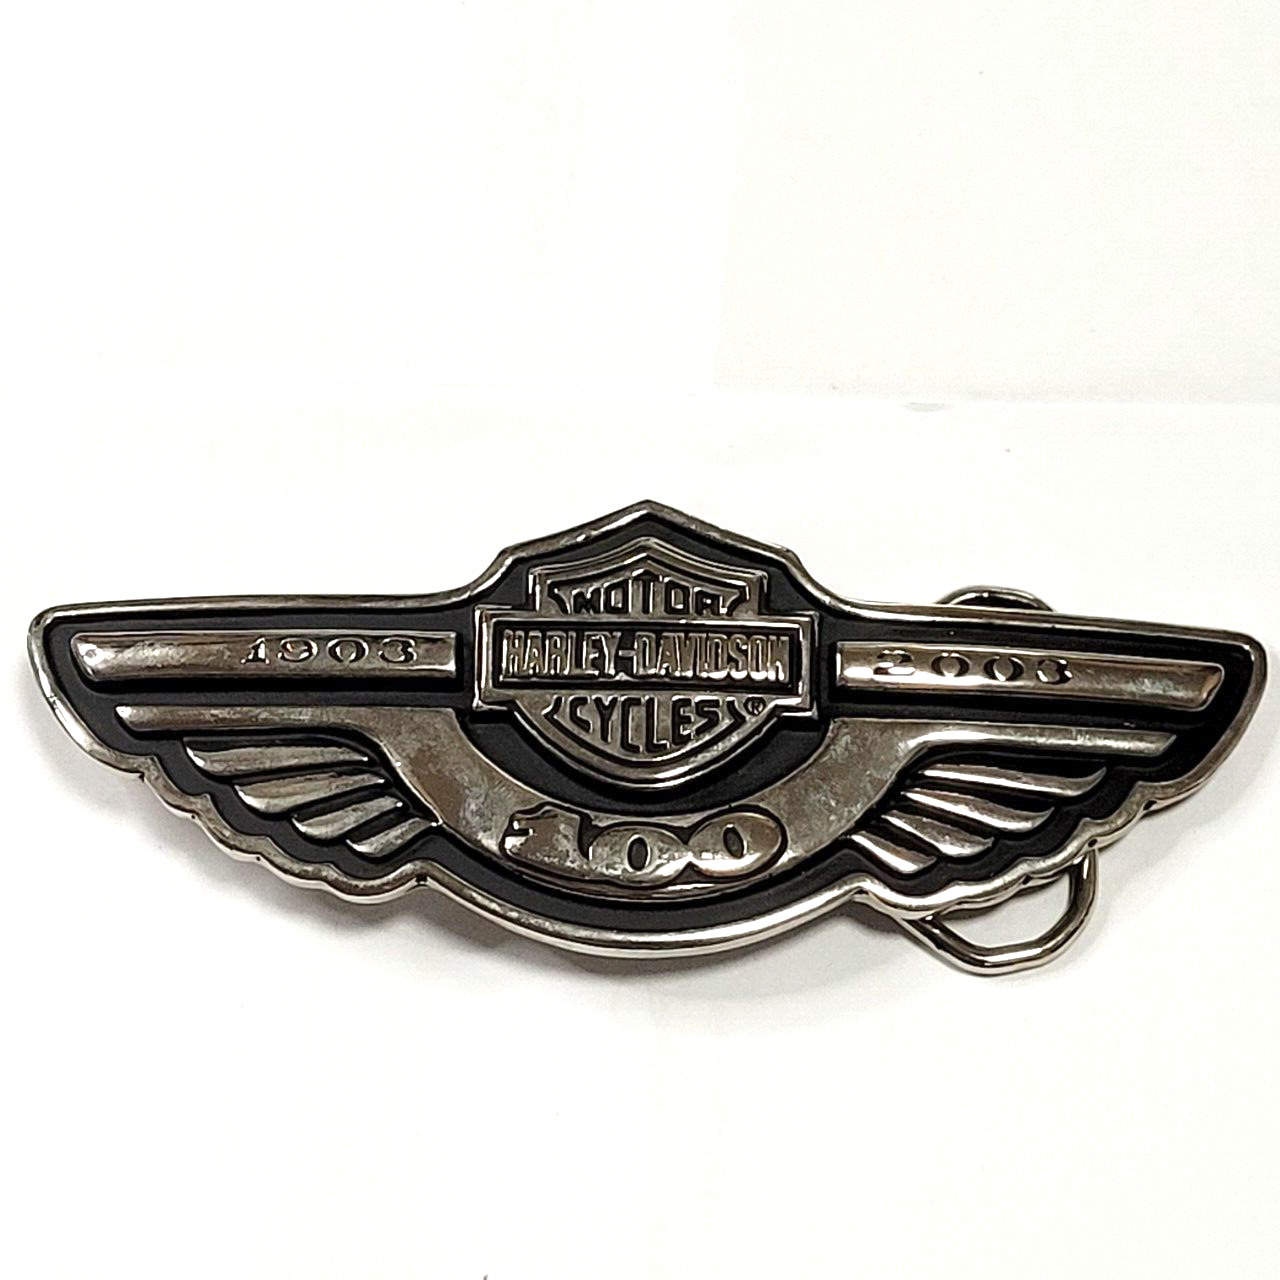 Vintage Harley Davidson Belt Buckle 1903-2003 100th Anniversary Logo Wing Biker